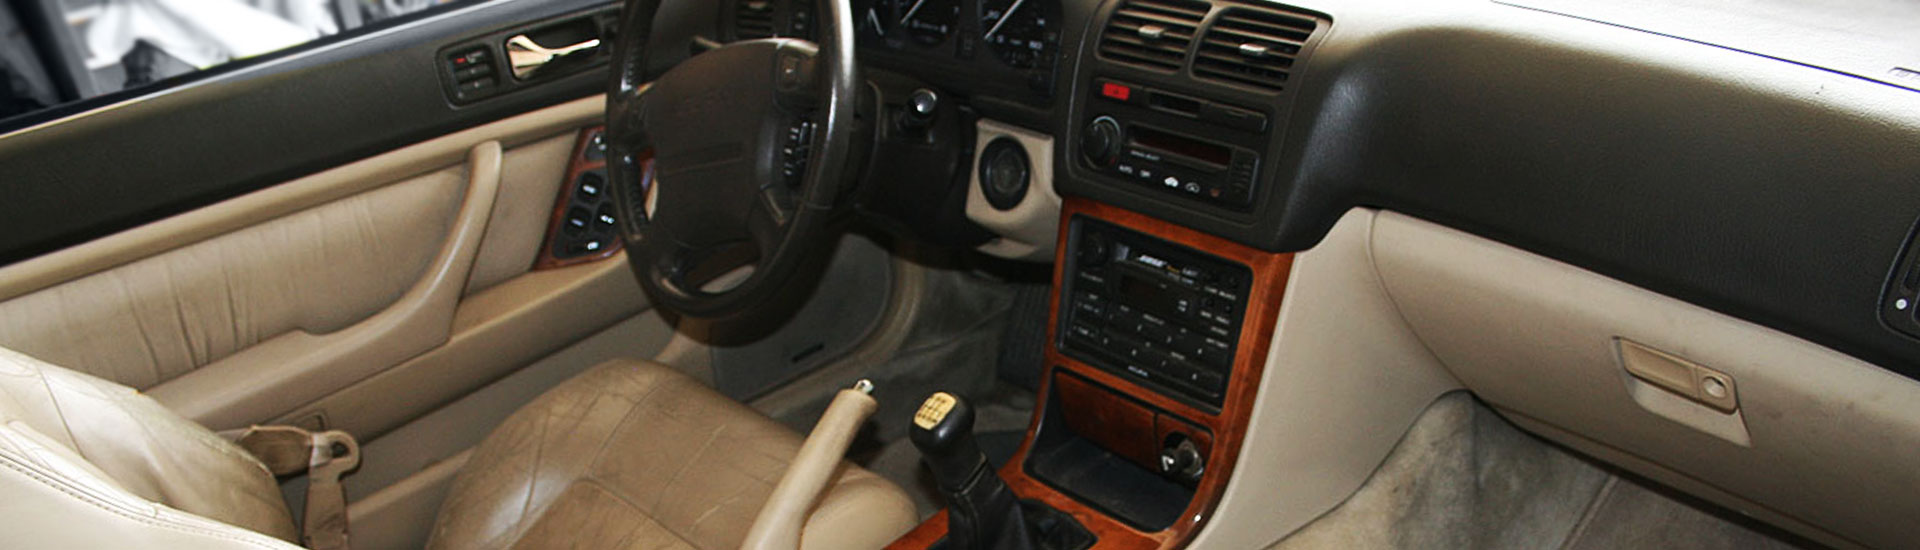 Acura Legend Custom Dash Kits